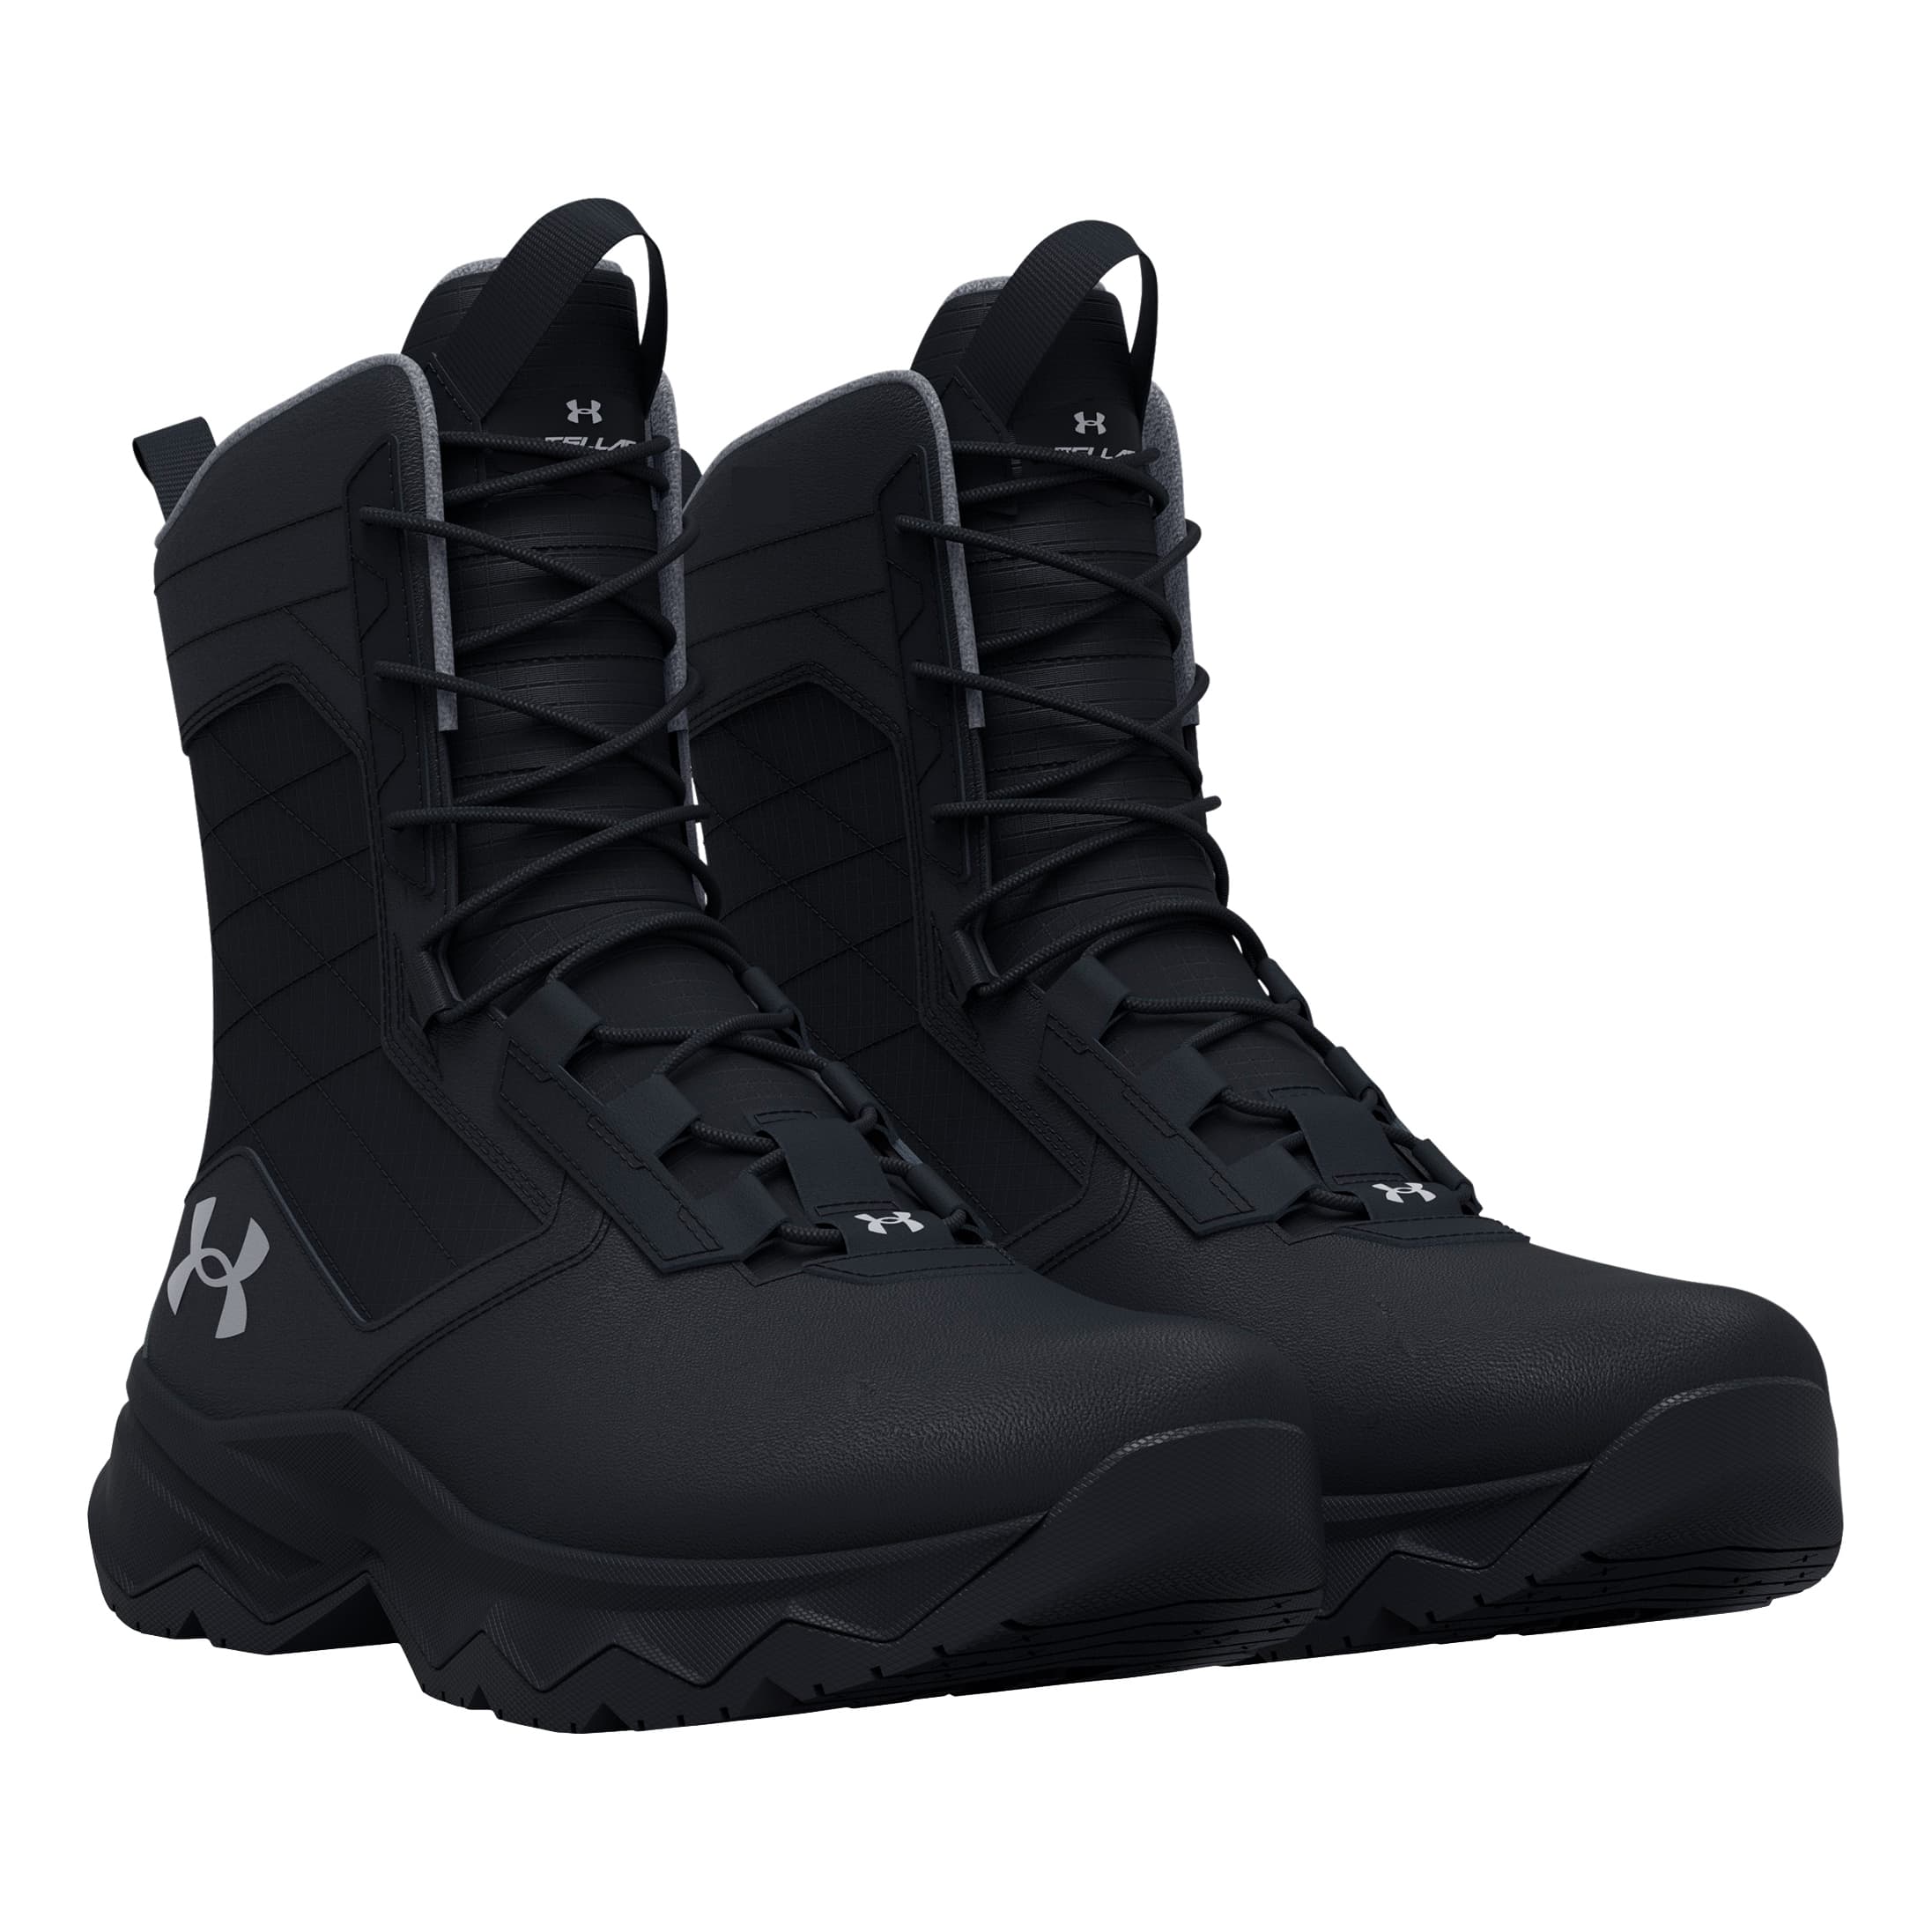 Under Armour® Men’s Stellar G2 Tactical Boot - pair